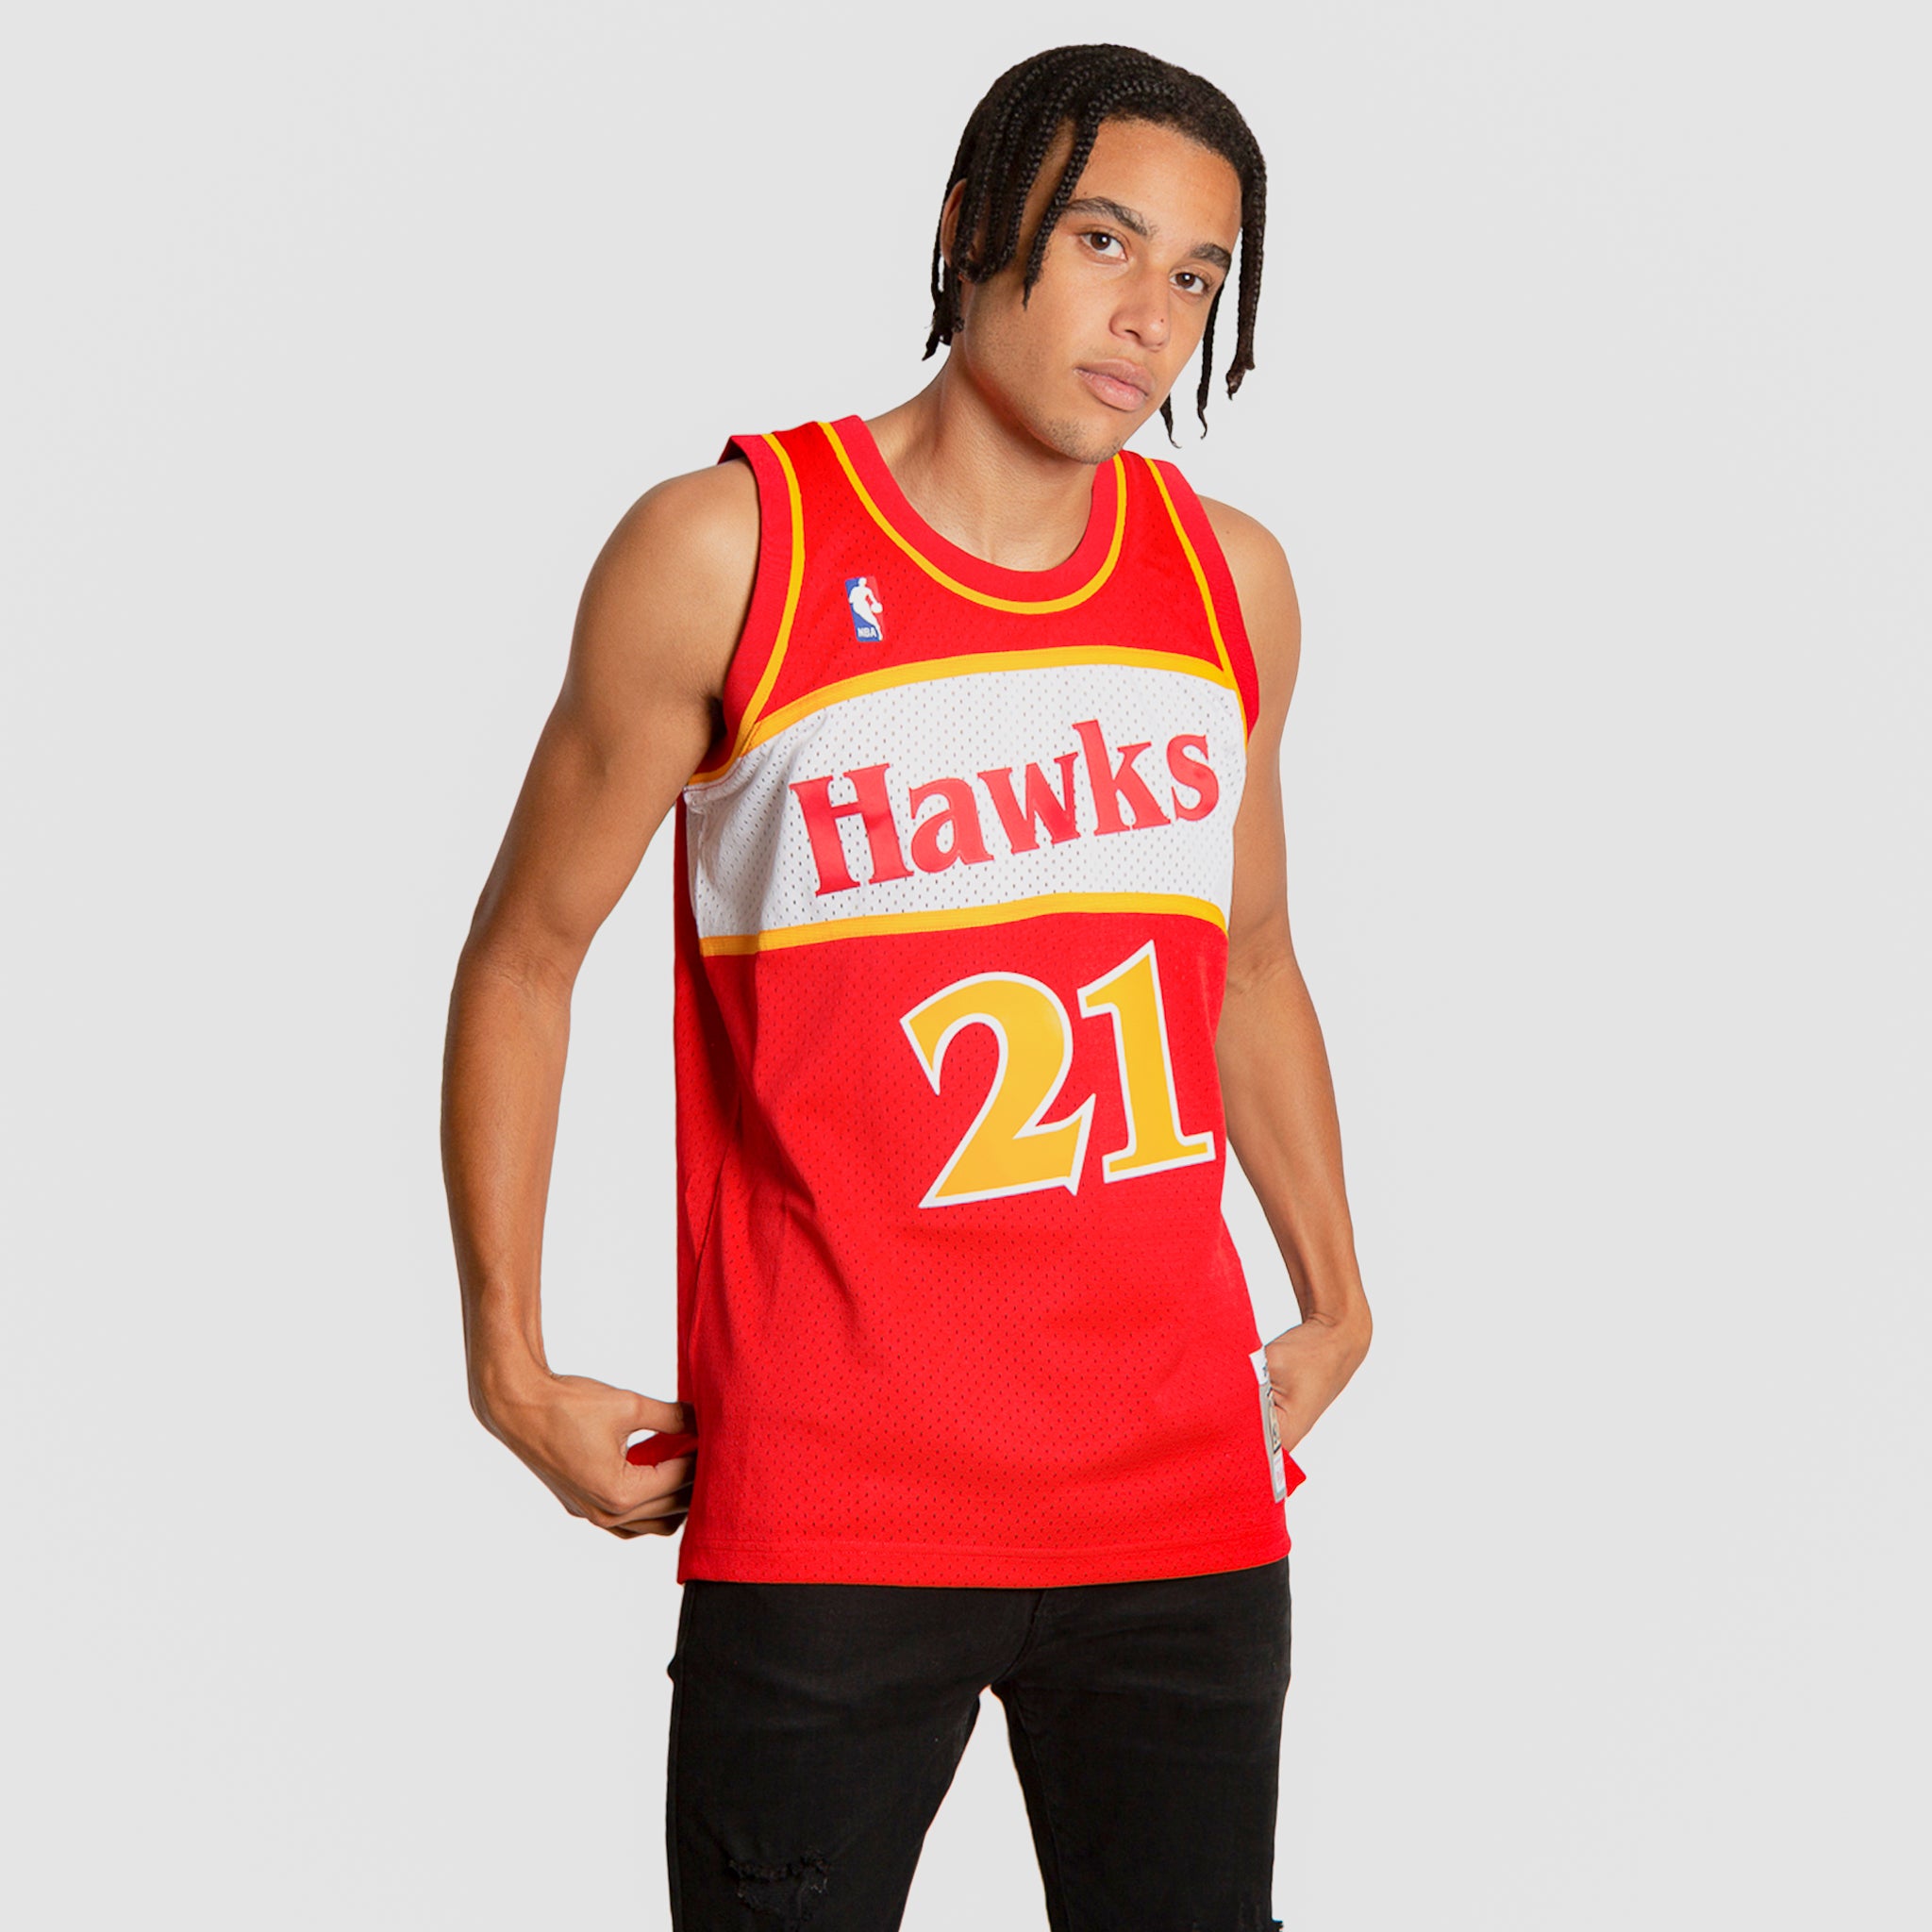 NBA Atlanta Hawks Basketball Red Jersey Size M Crackle Pop Style